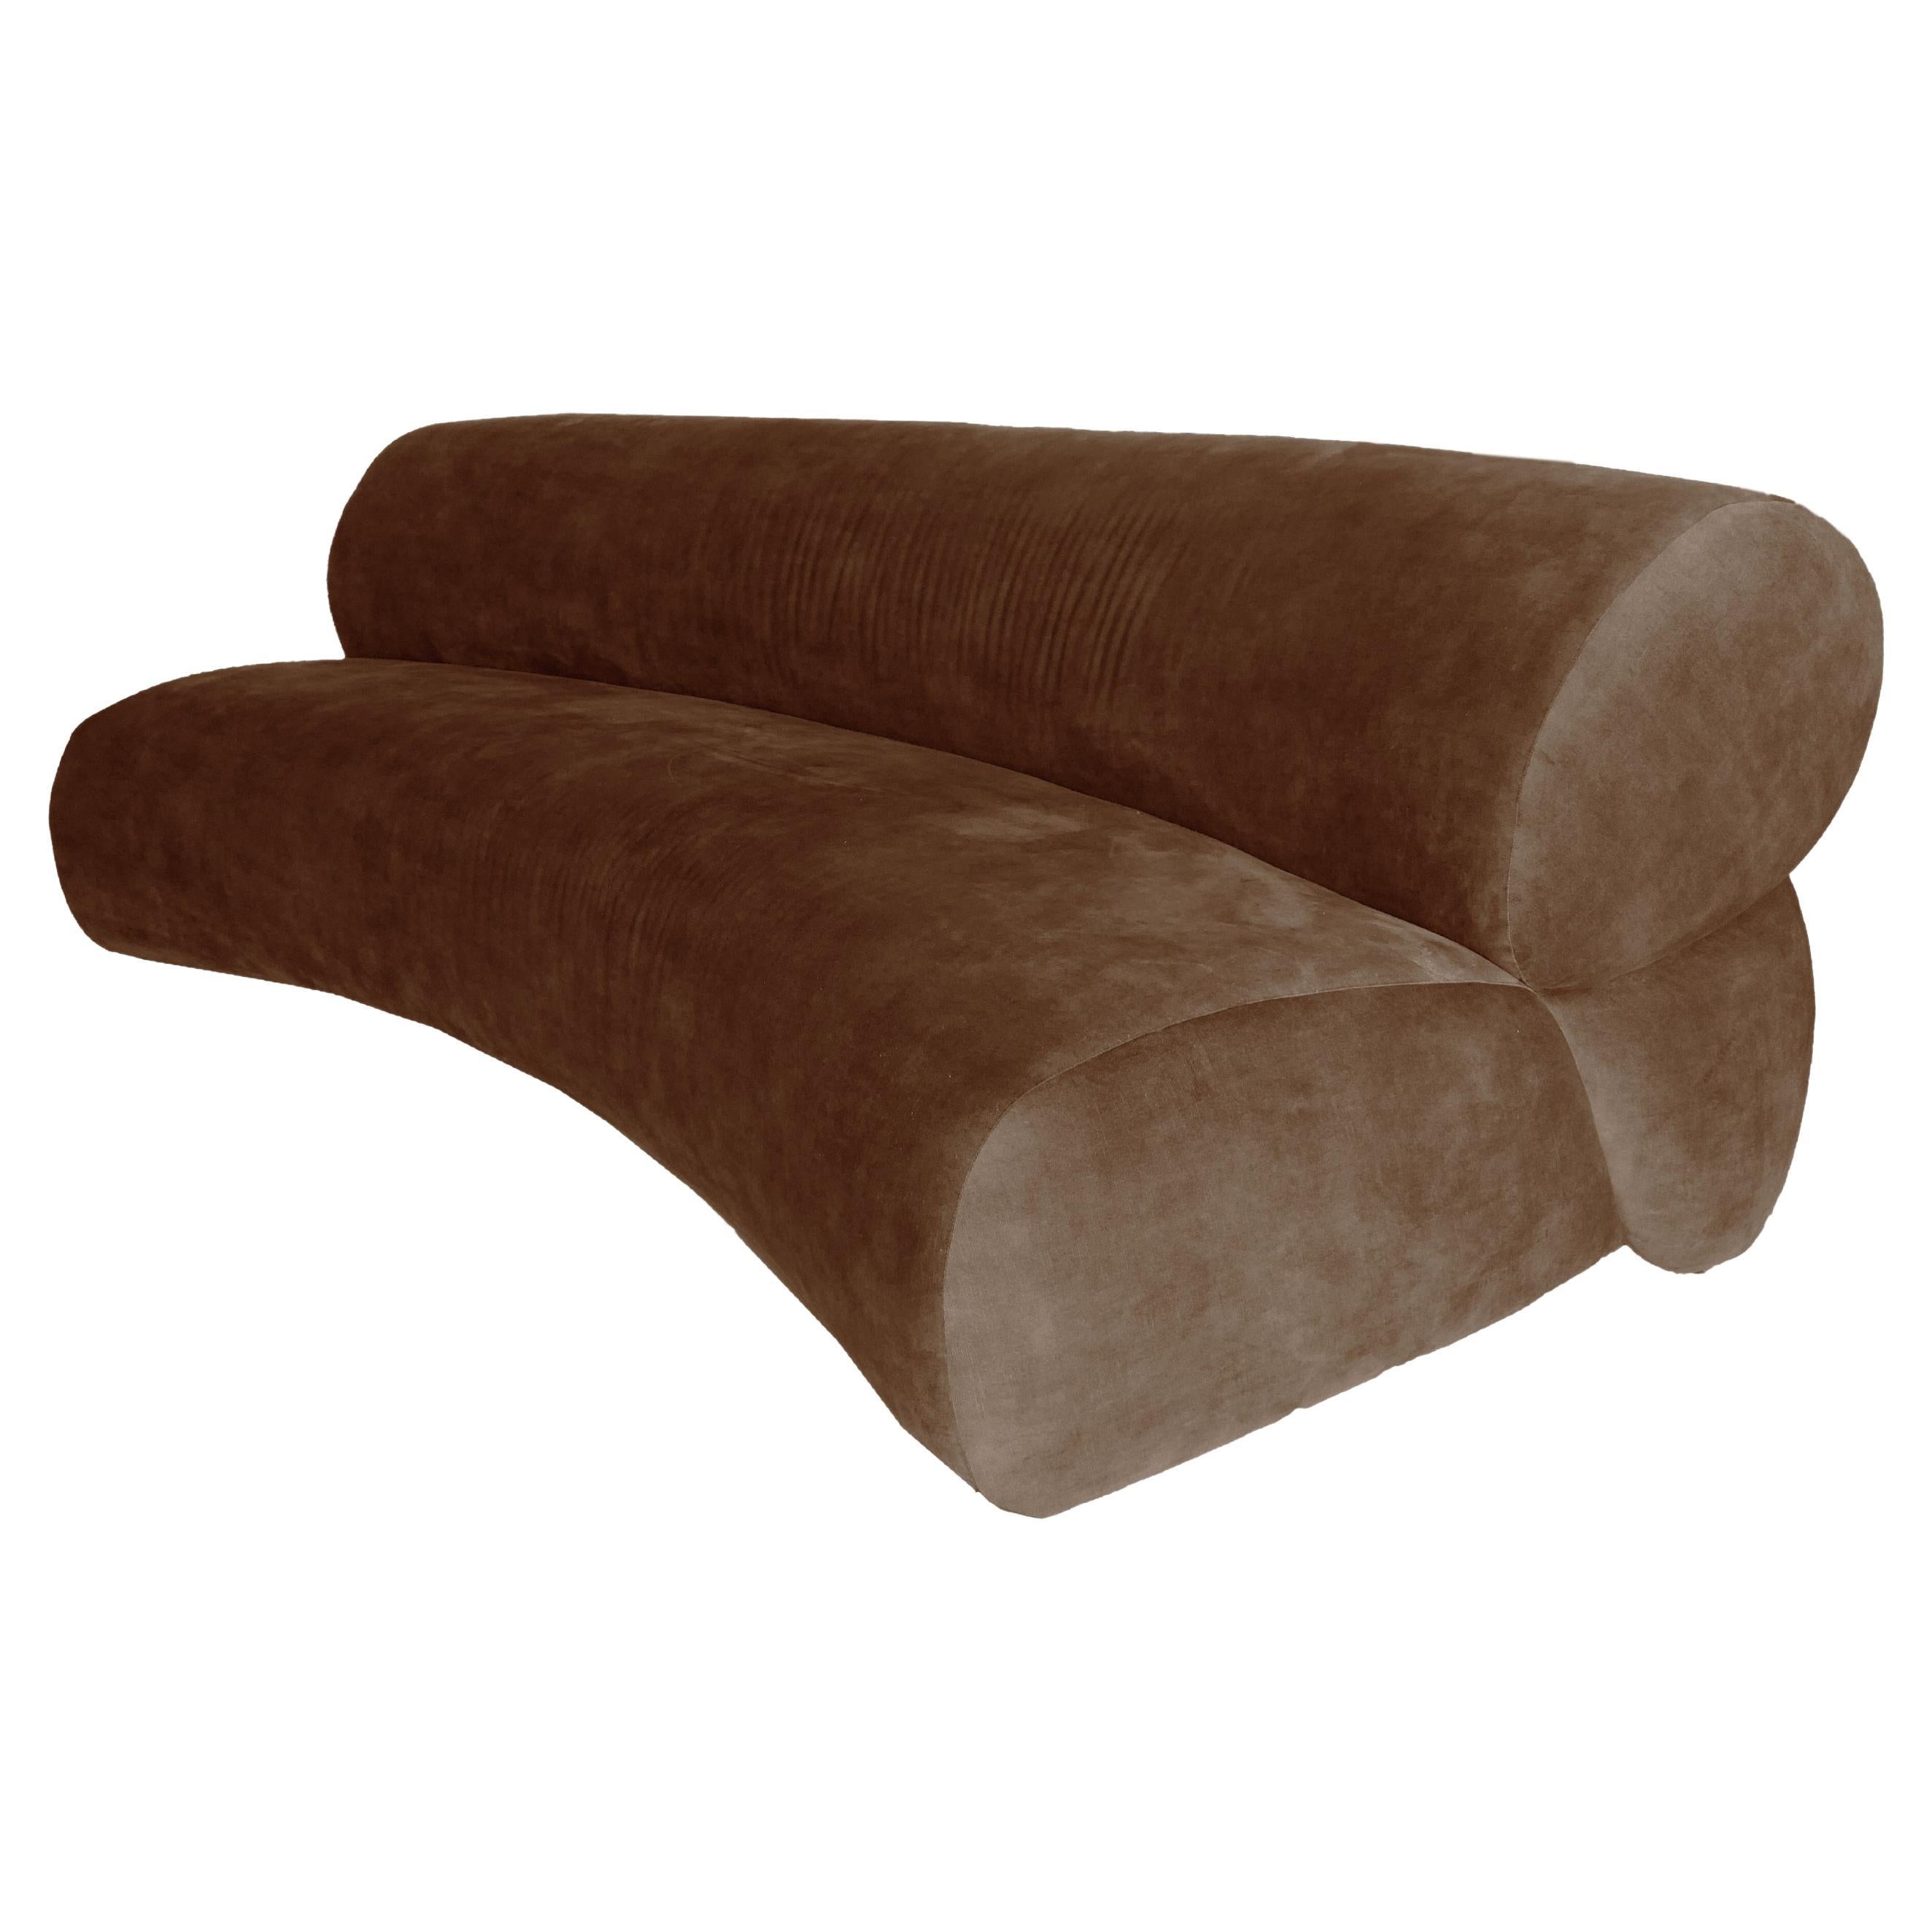 PIPA Curved Sofa Chocolate Brown velvet, Contemporary style by Sergio Prieto